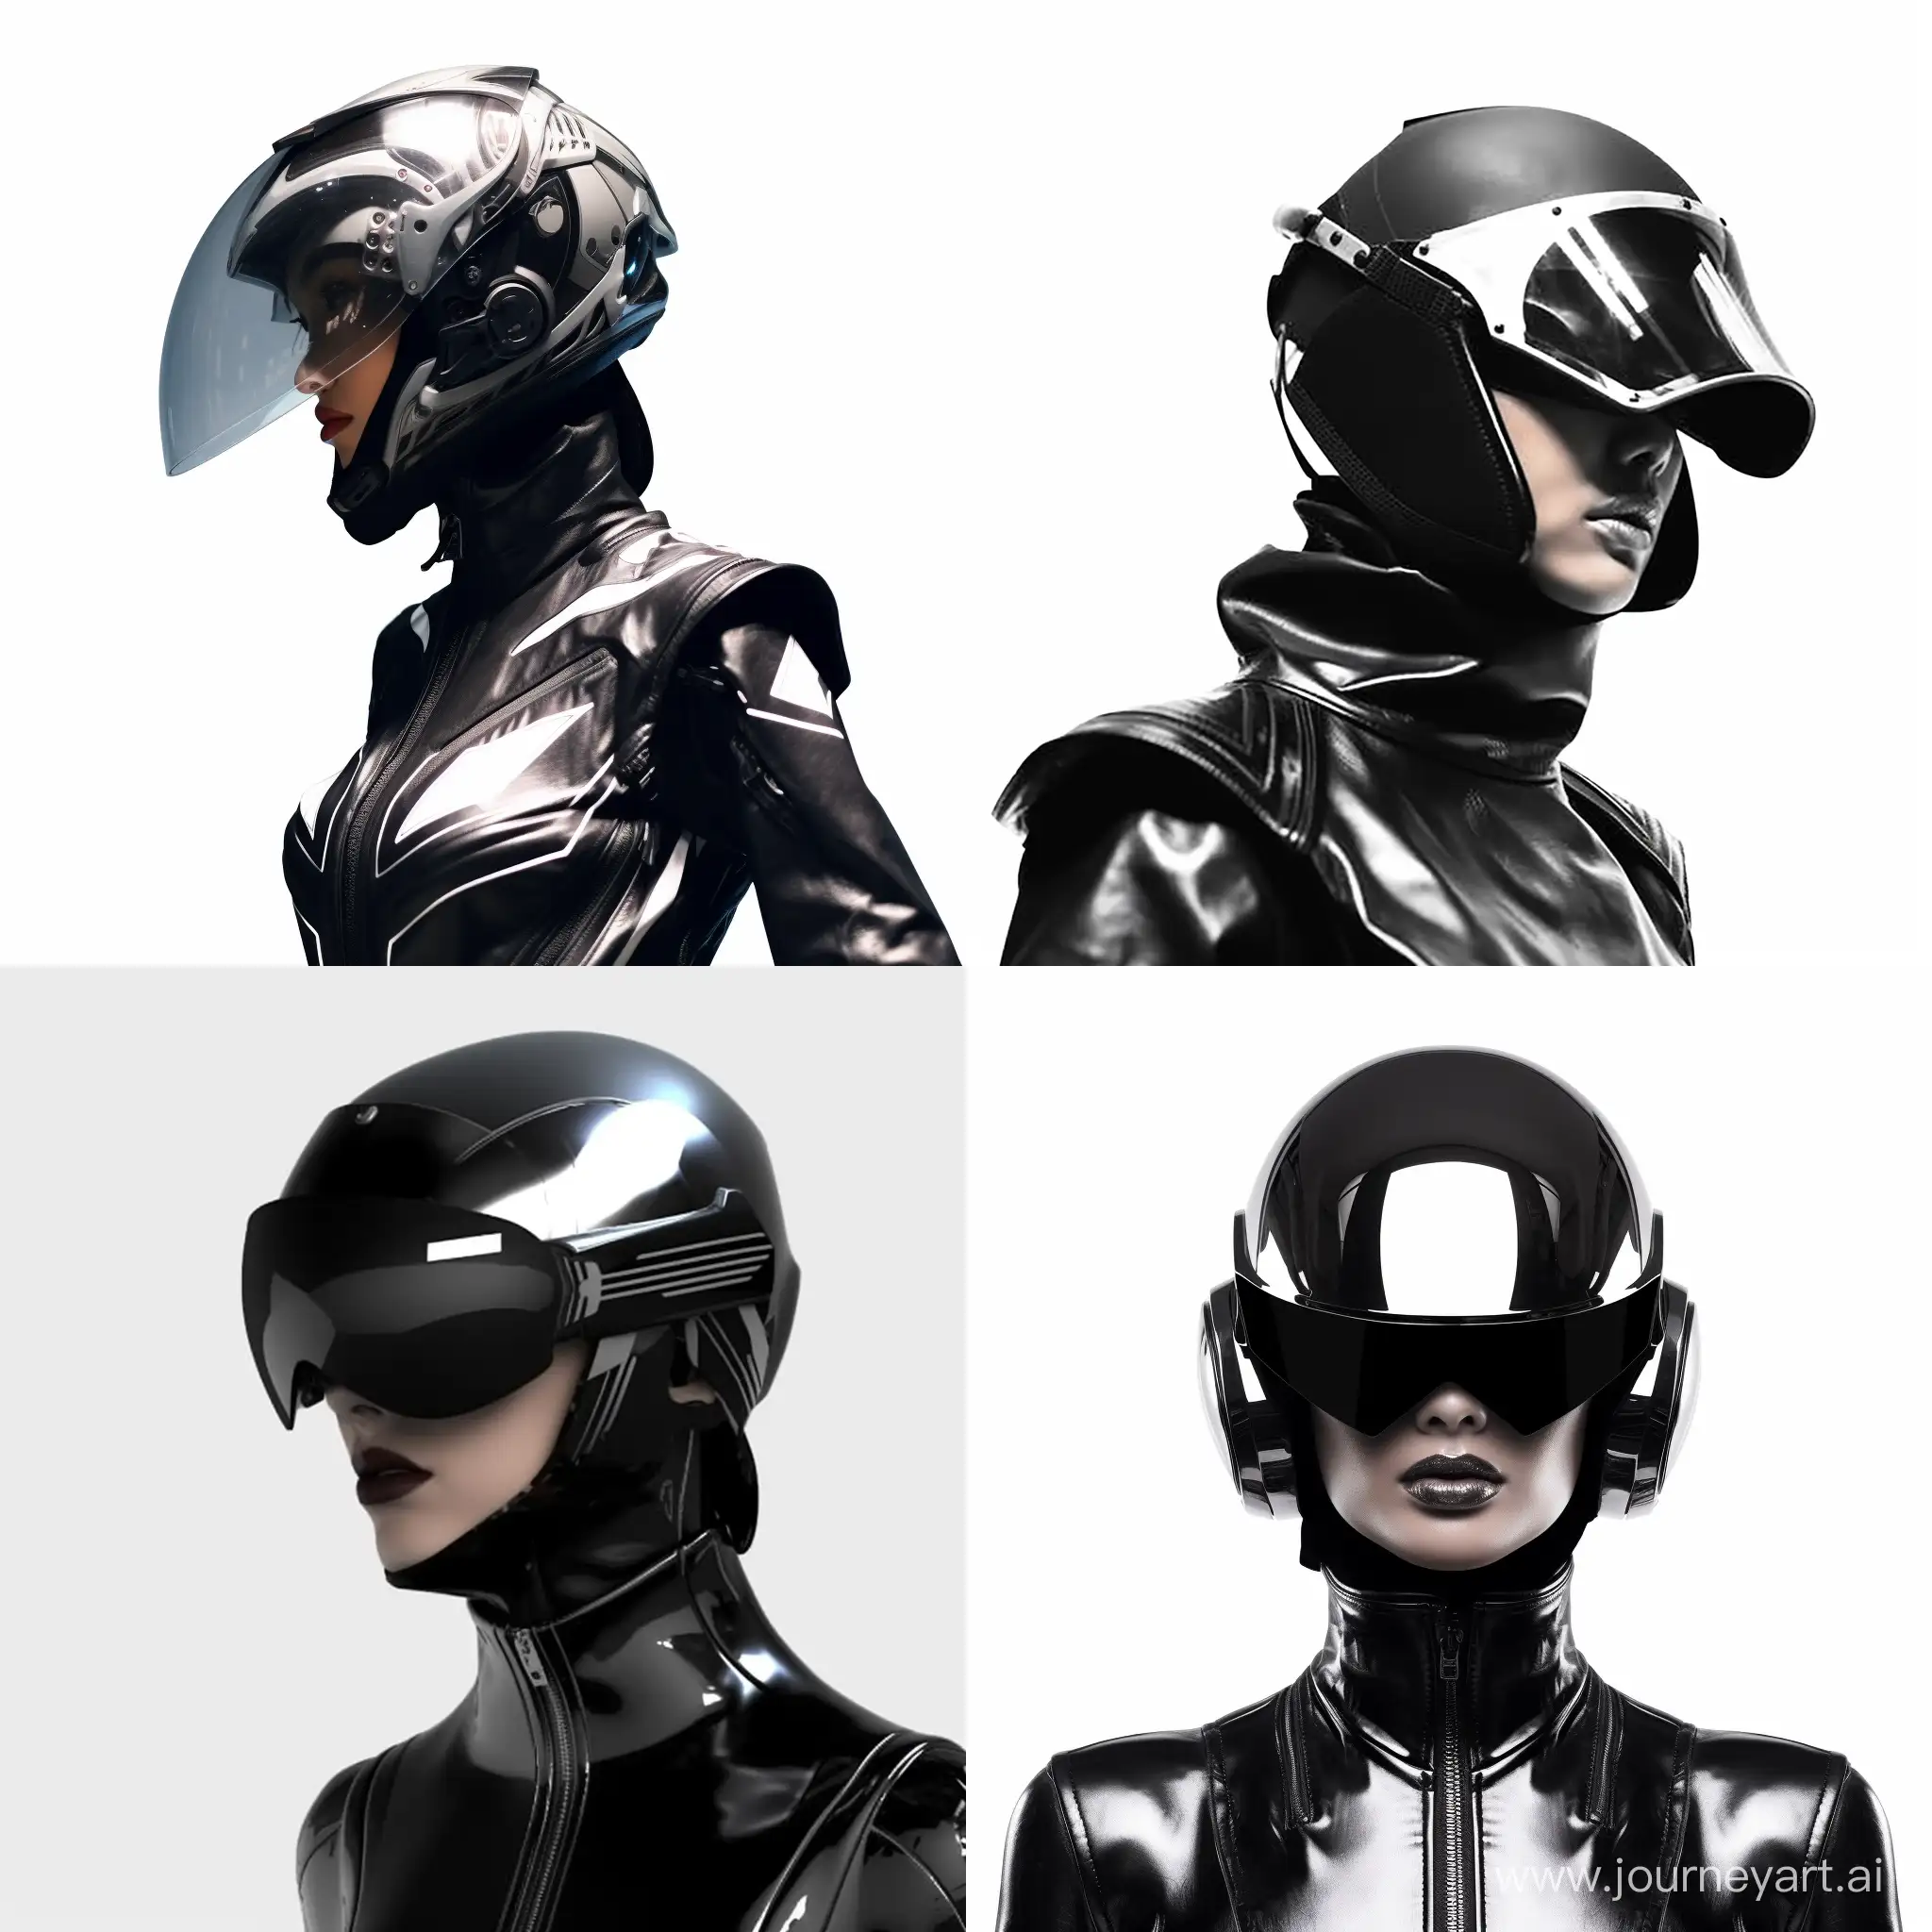 Futuristic-Fashion-Elegance-Dark-Motorcycle-Helmet-Ensemble-with-Anamorphic-Glare